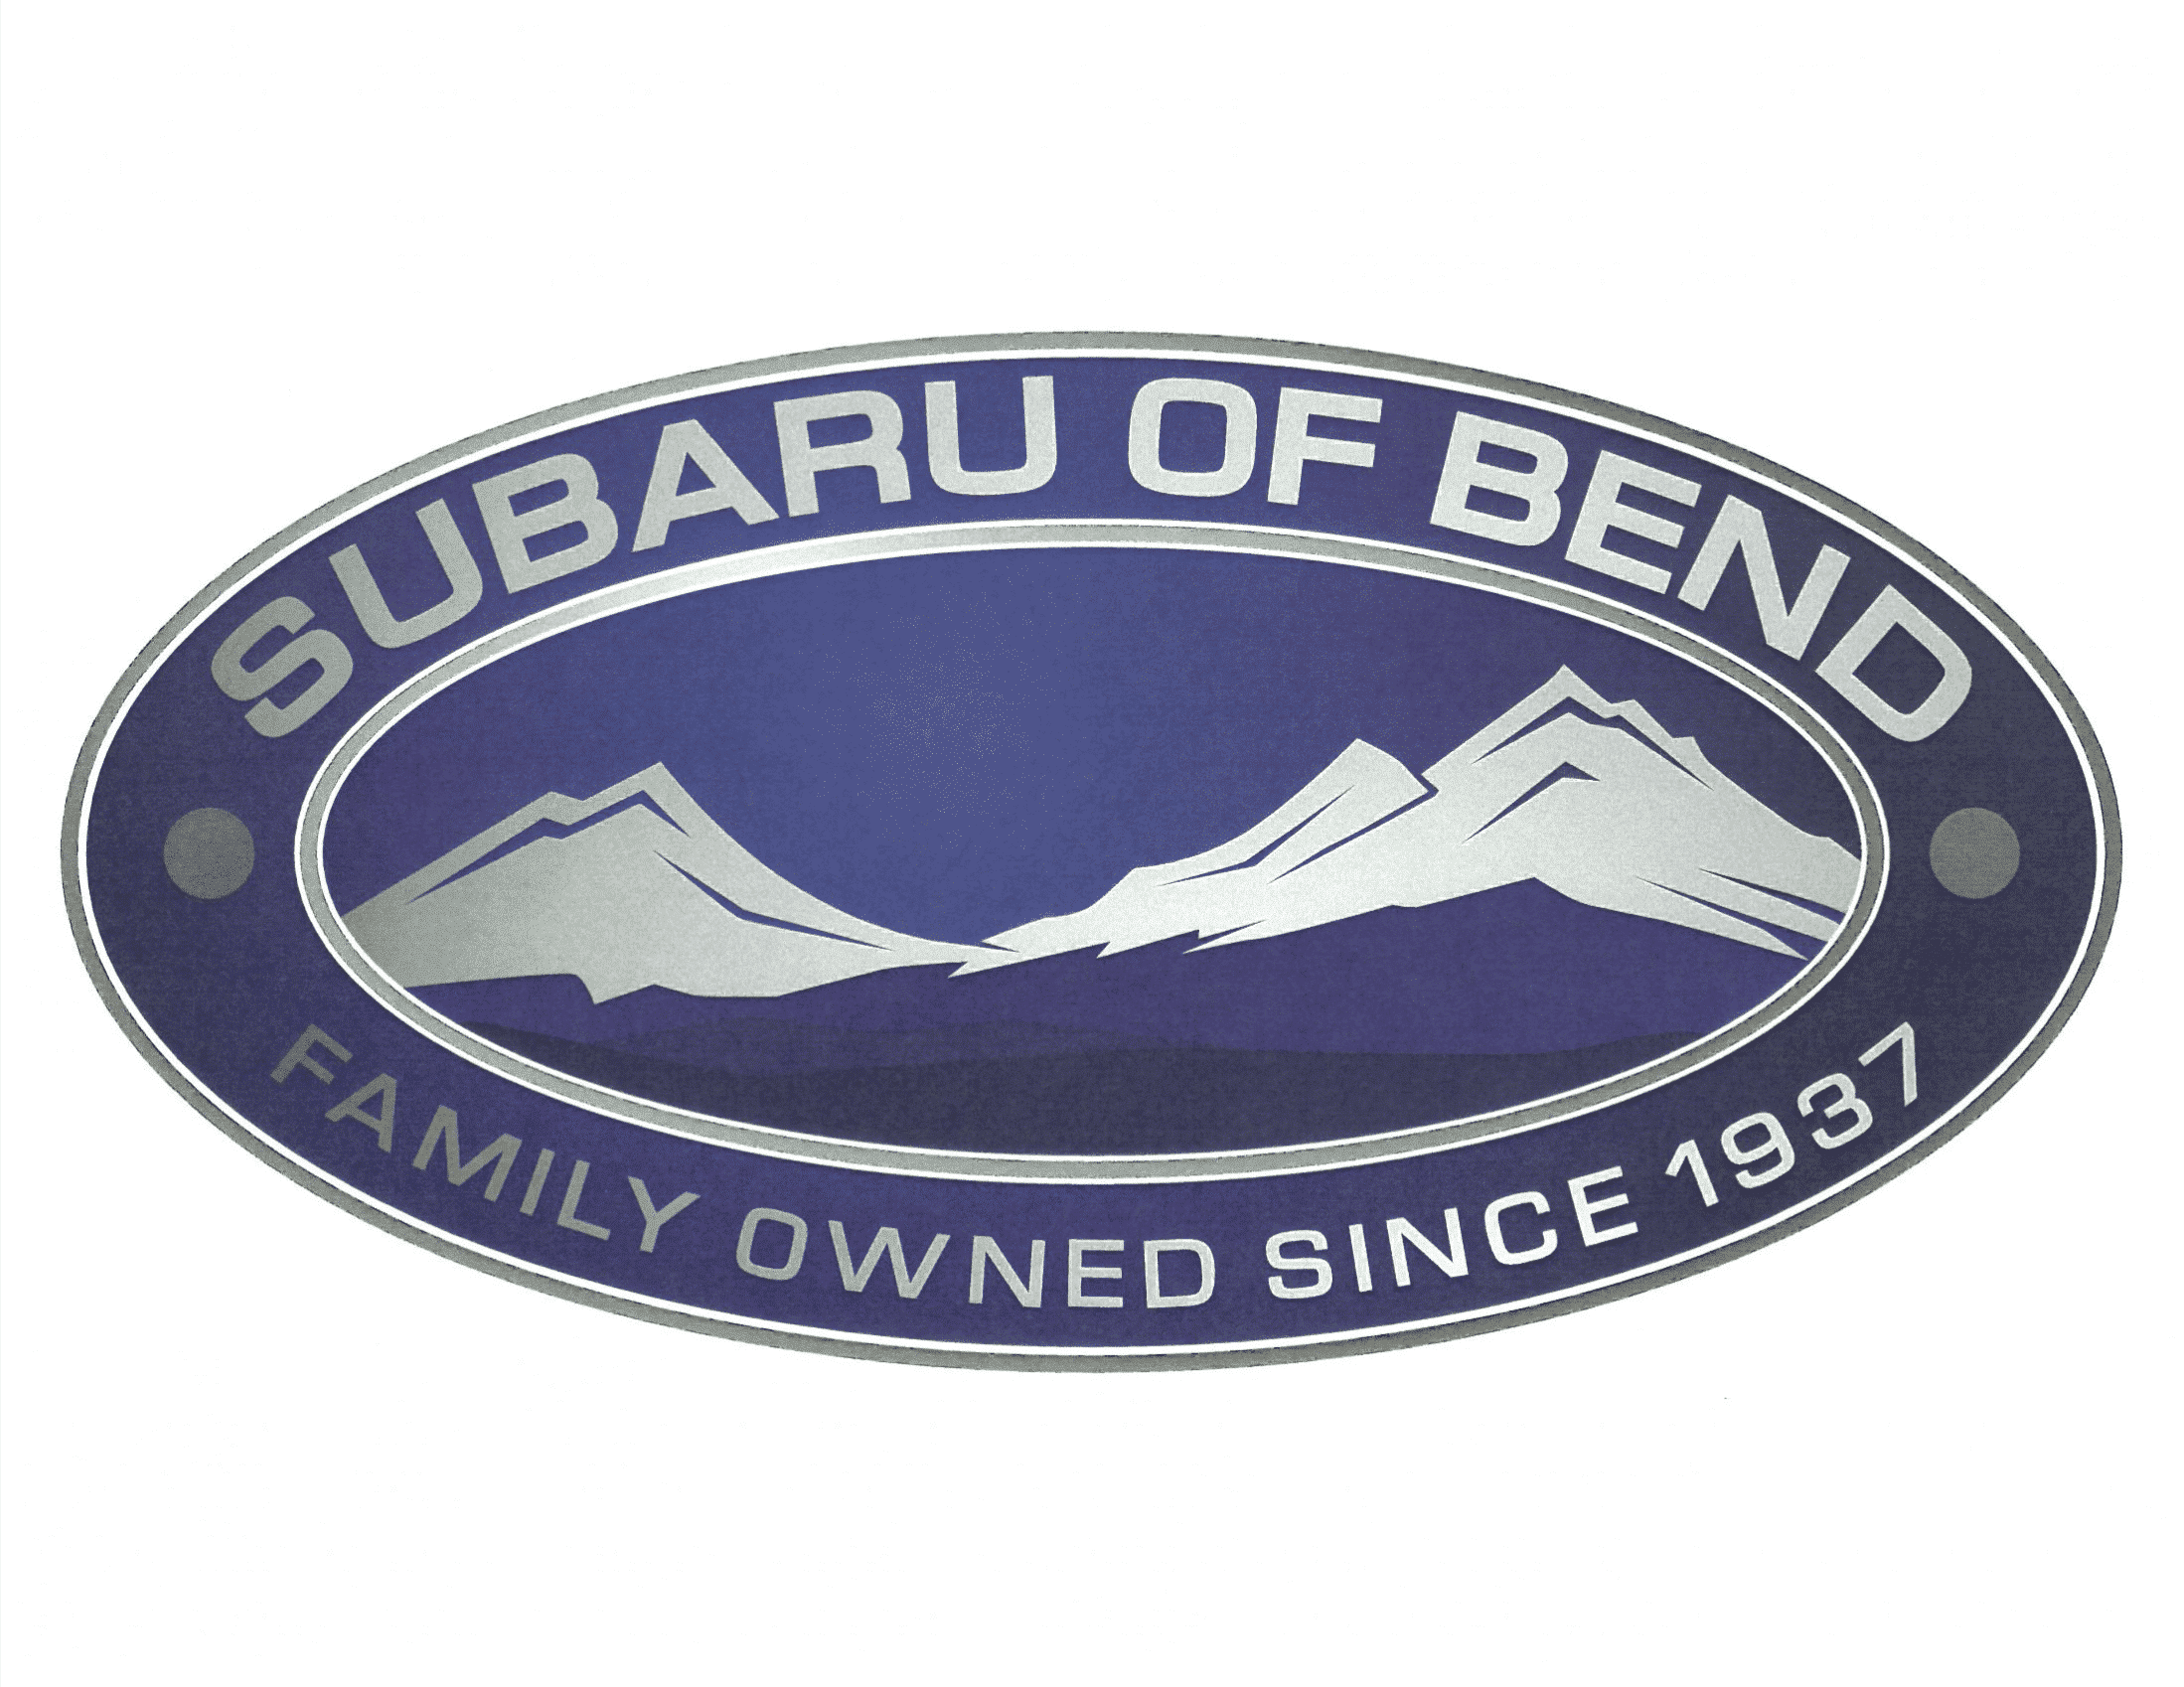 Subaru-of-bend-logo.png